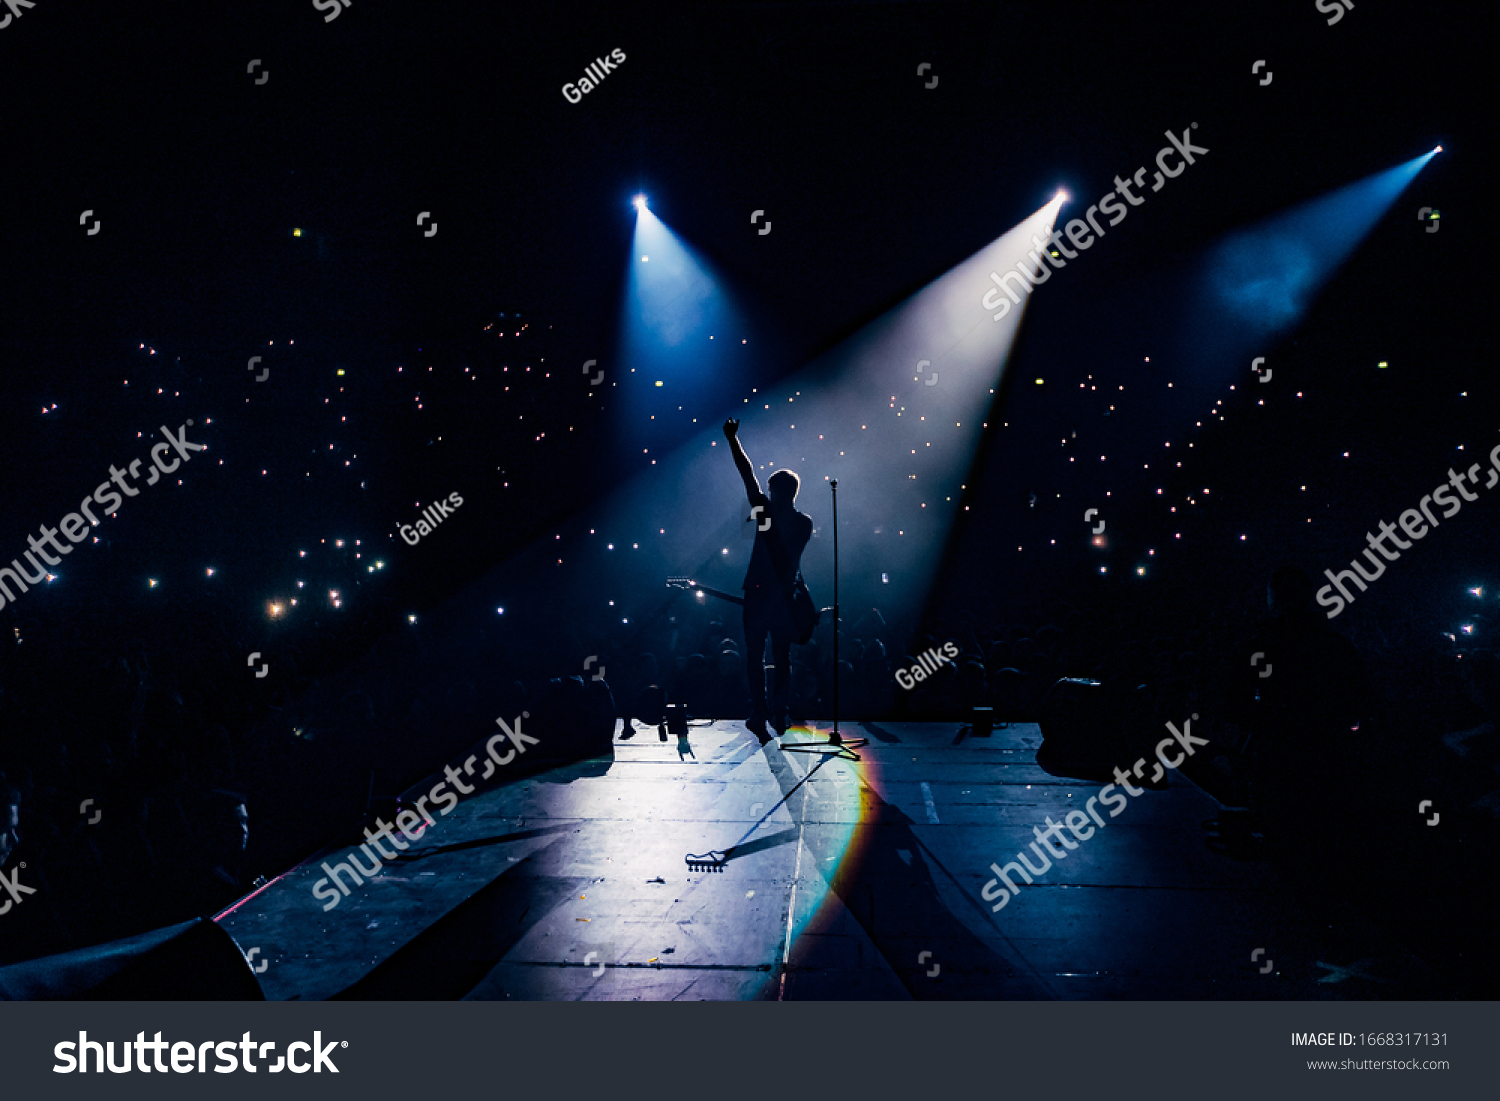 20,689 Concert stage view Images, Stock Photos & Vectors | Shutterstock